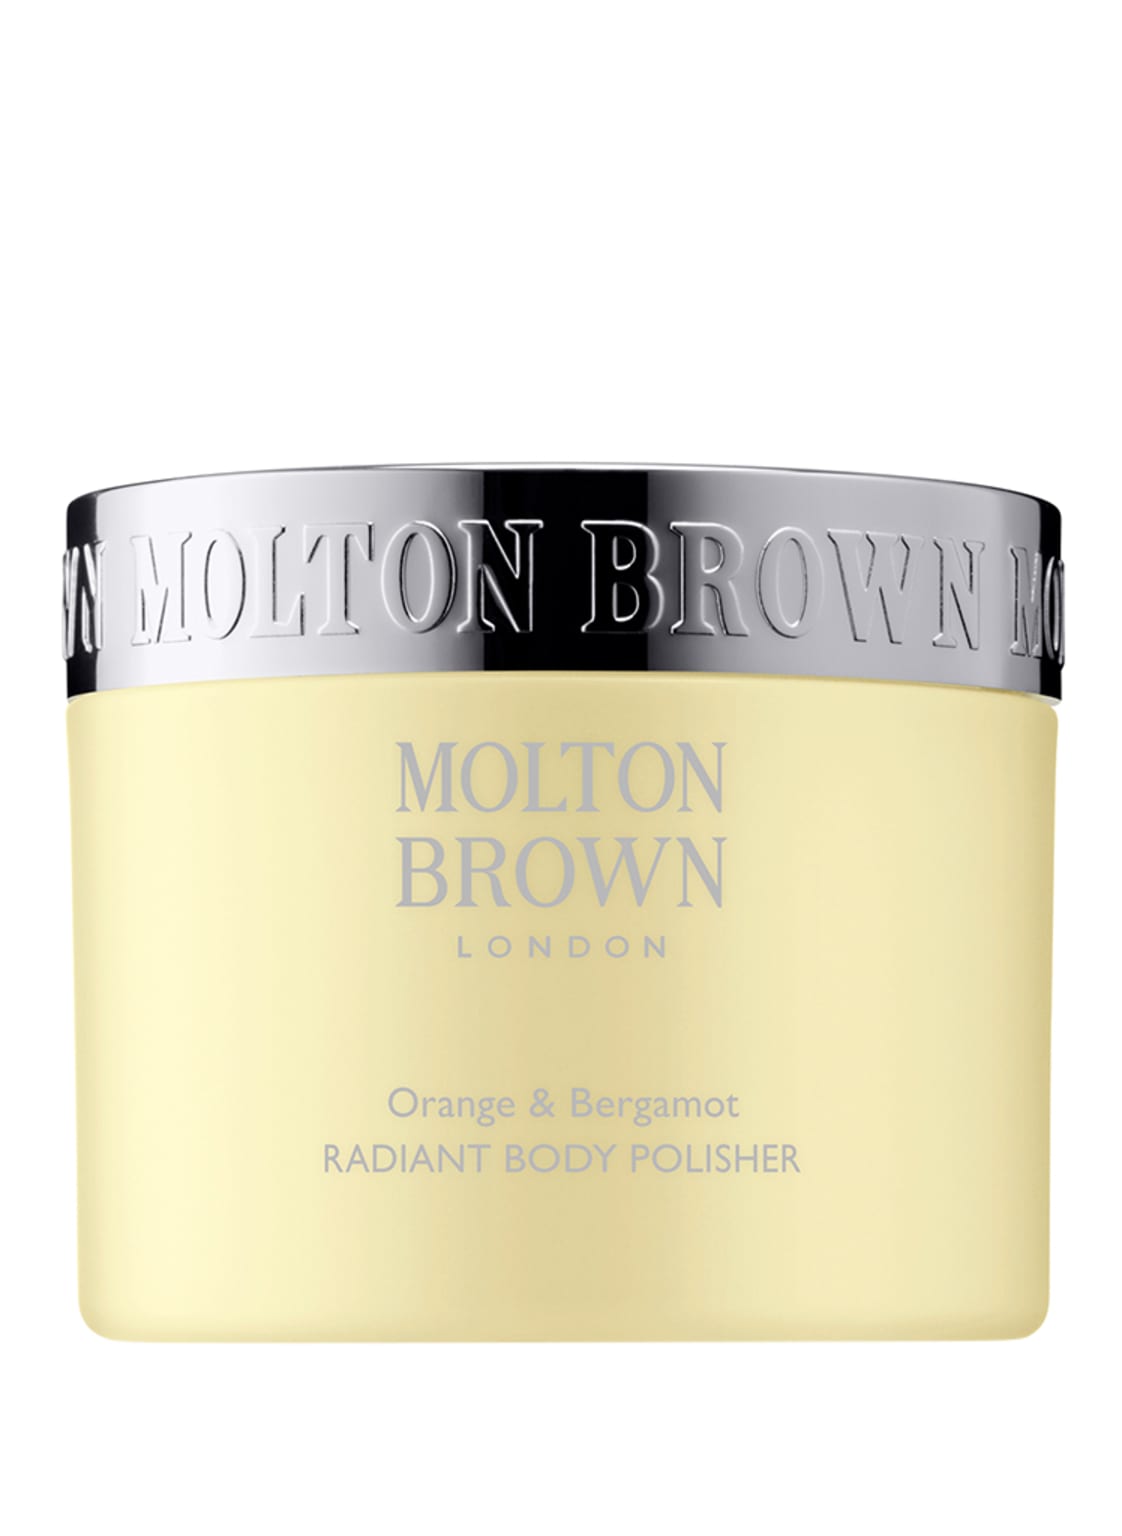 Molton Brown Orange & Bergamot Radiant Body Polisher 275 g von MOLTON BROWN